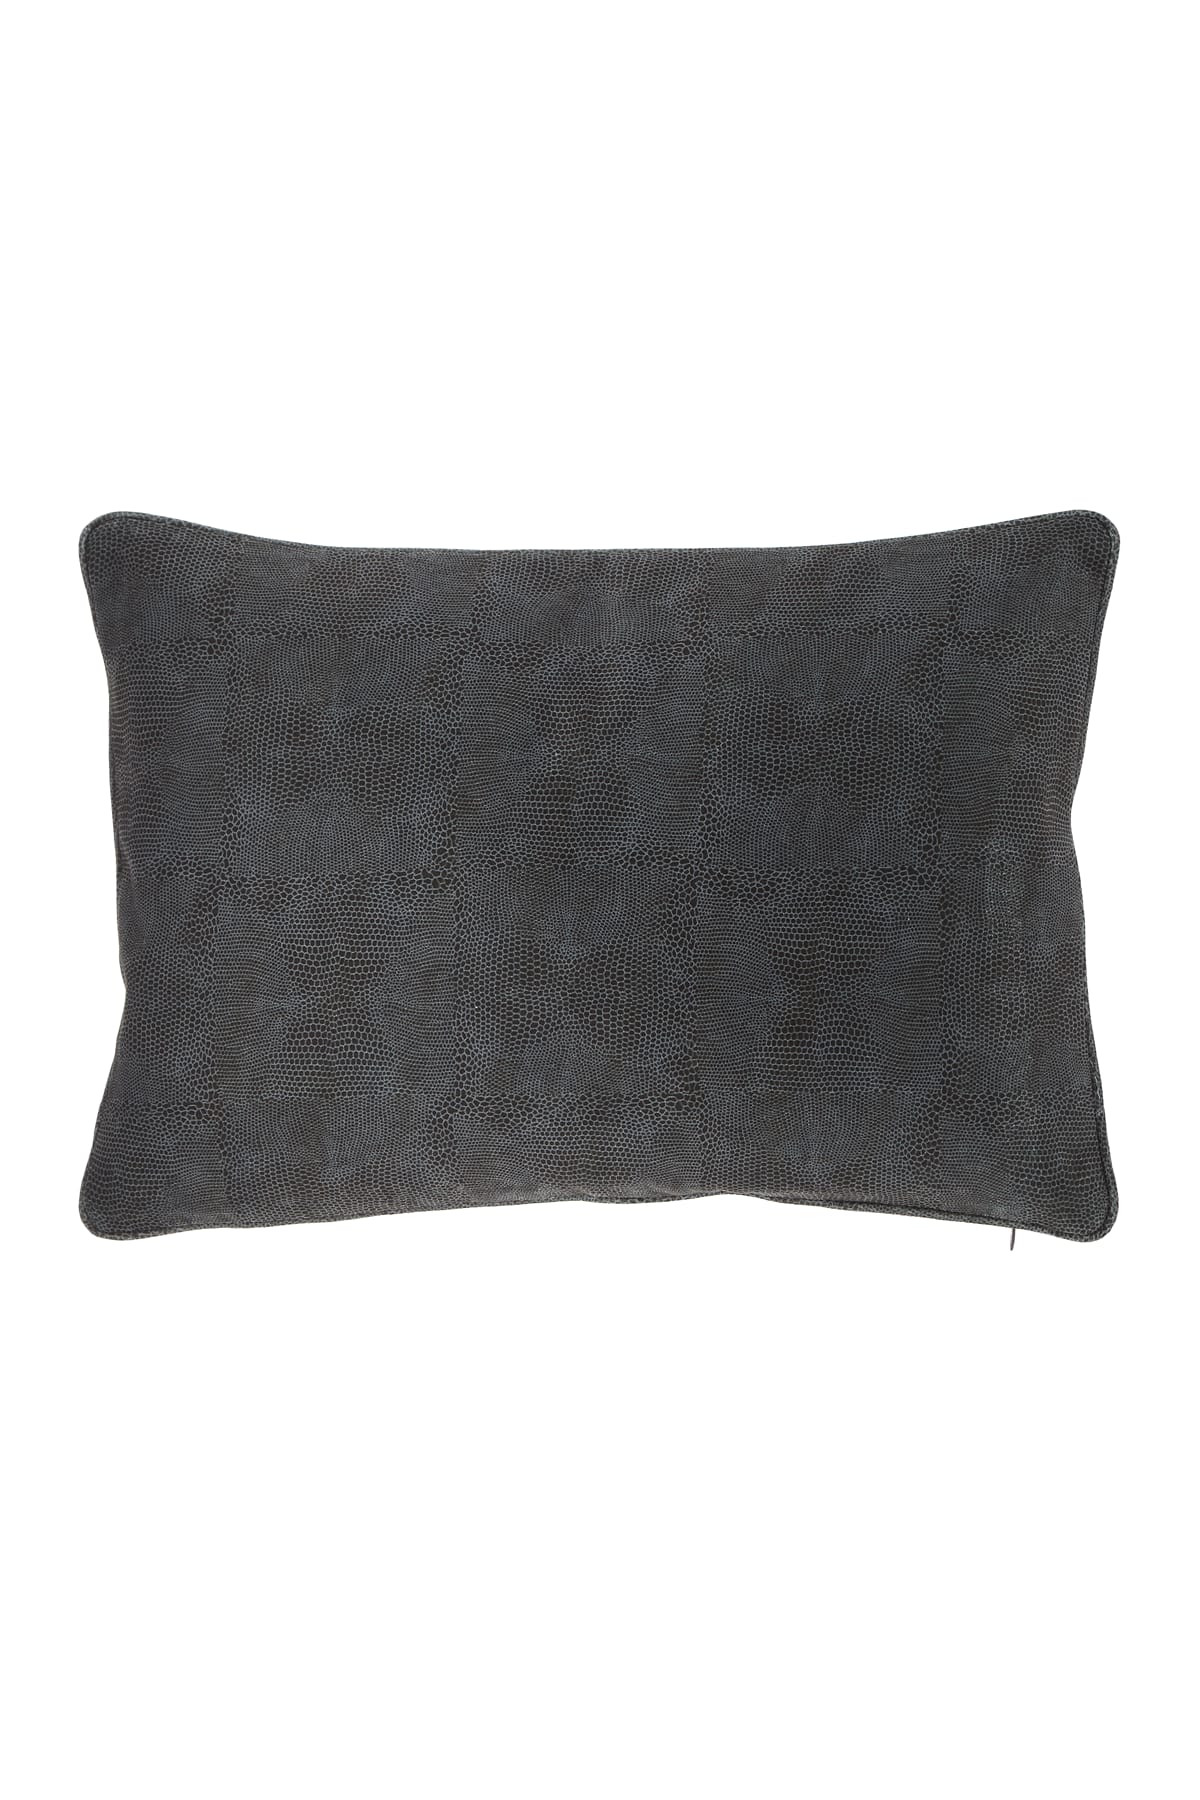 Image Legacy Shagreen Pillow, 14" x 20"